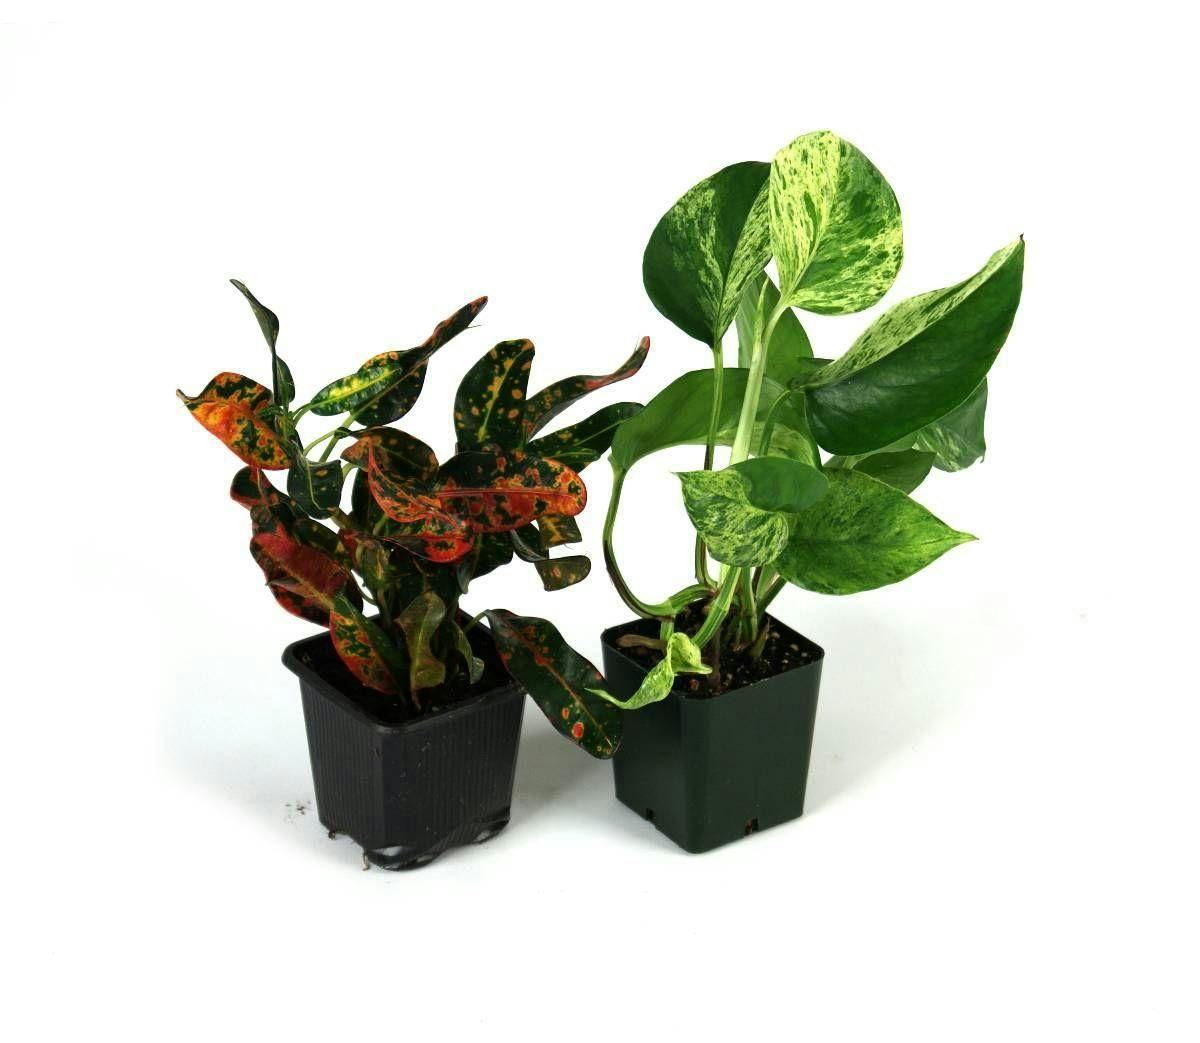 Image for Crested Gecko Vivarium Plant Kit (2 Plants) by Josh's Frogs